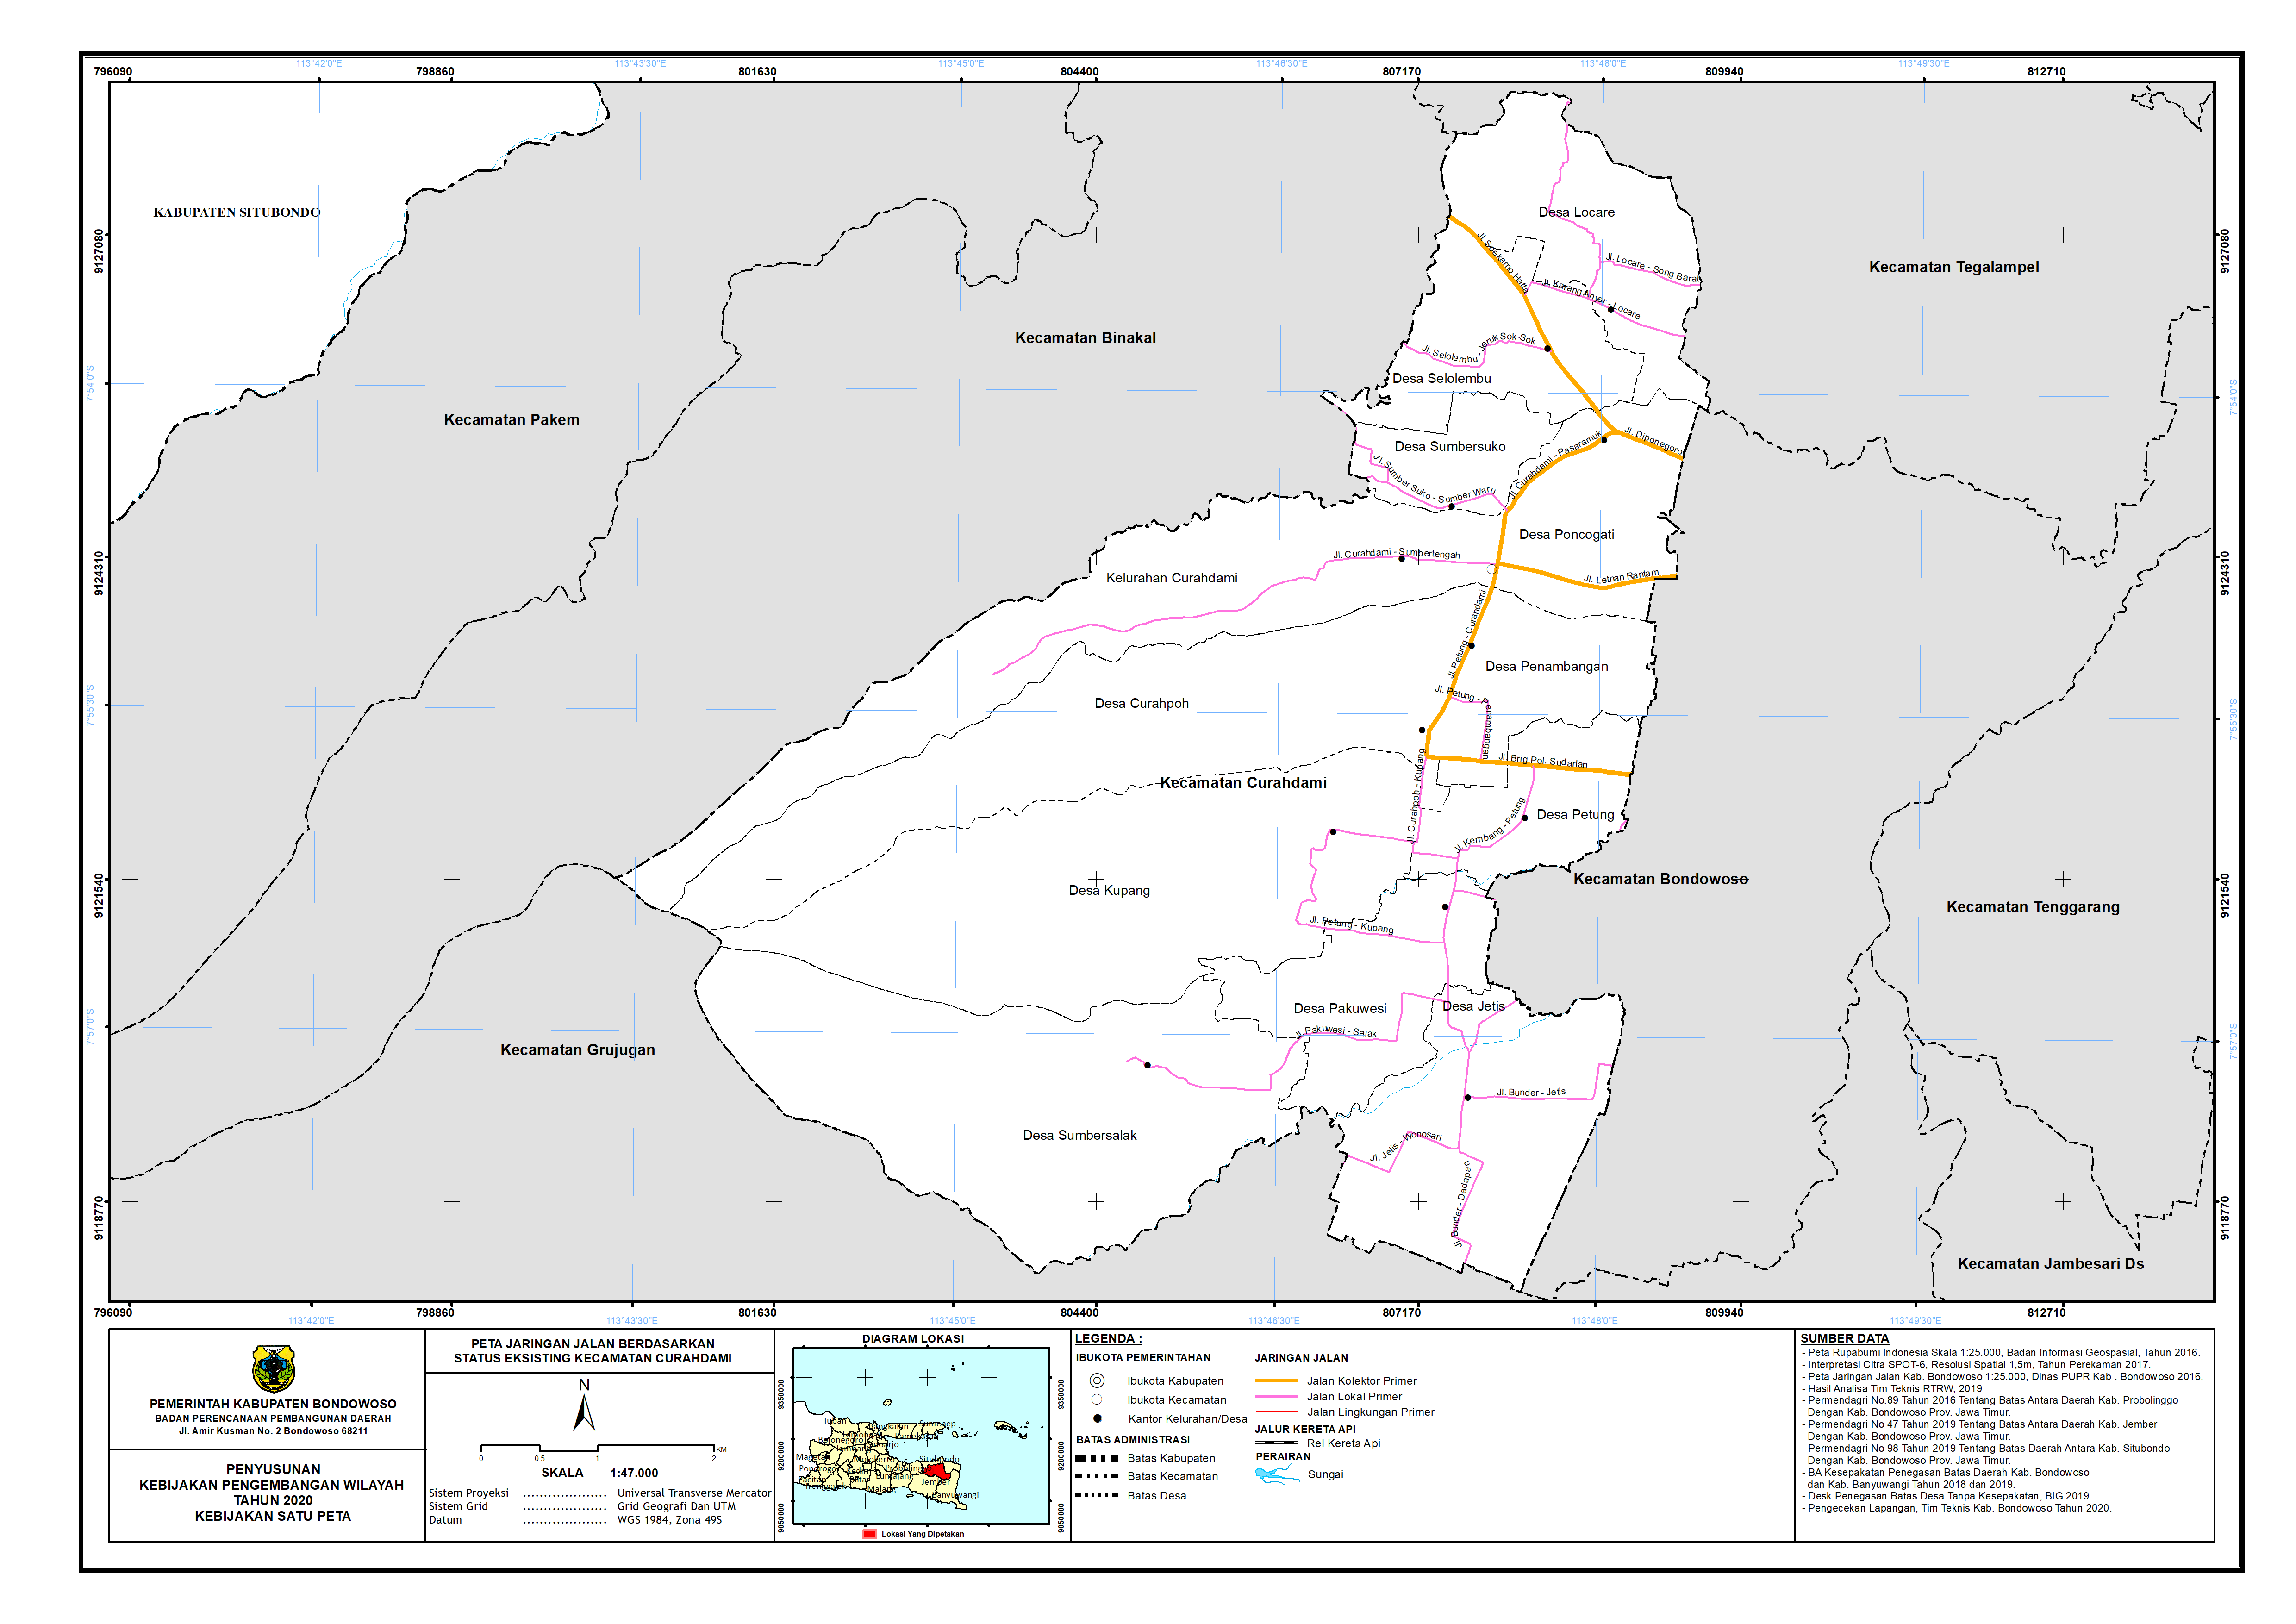 Peta Jaringan Jalan Berdasarkan Status Eksisting Kecamatan Curahdami.png